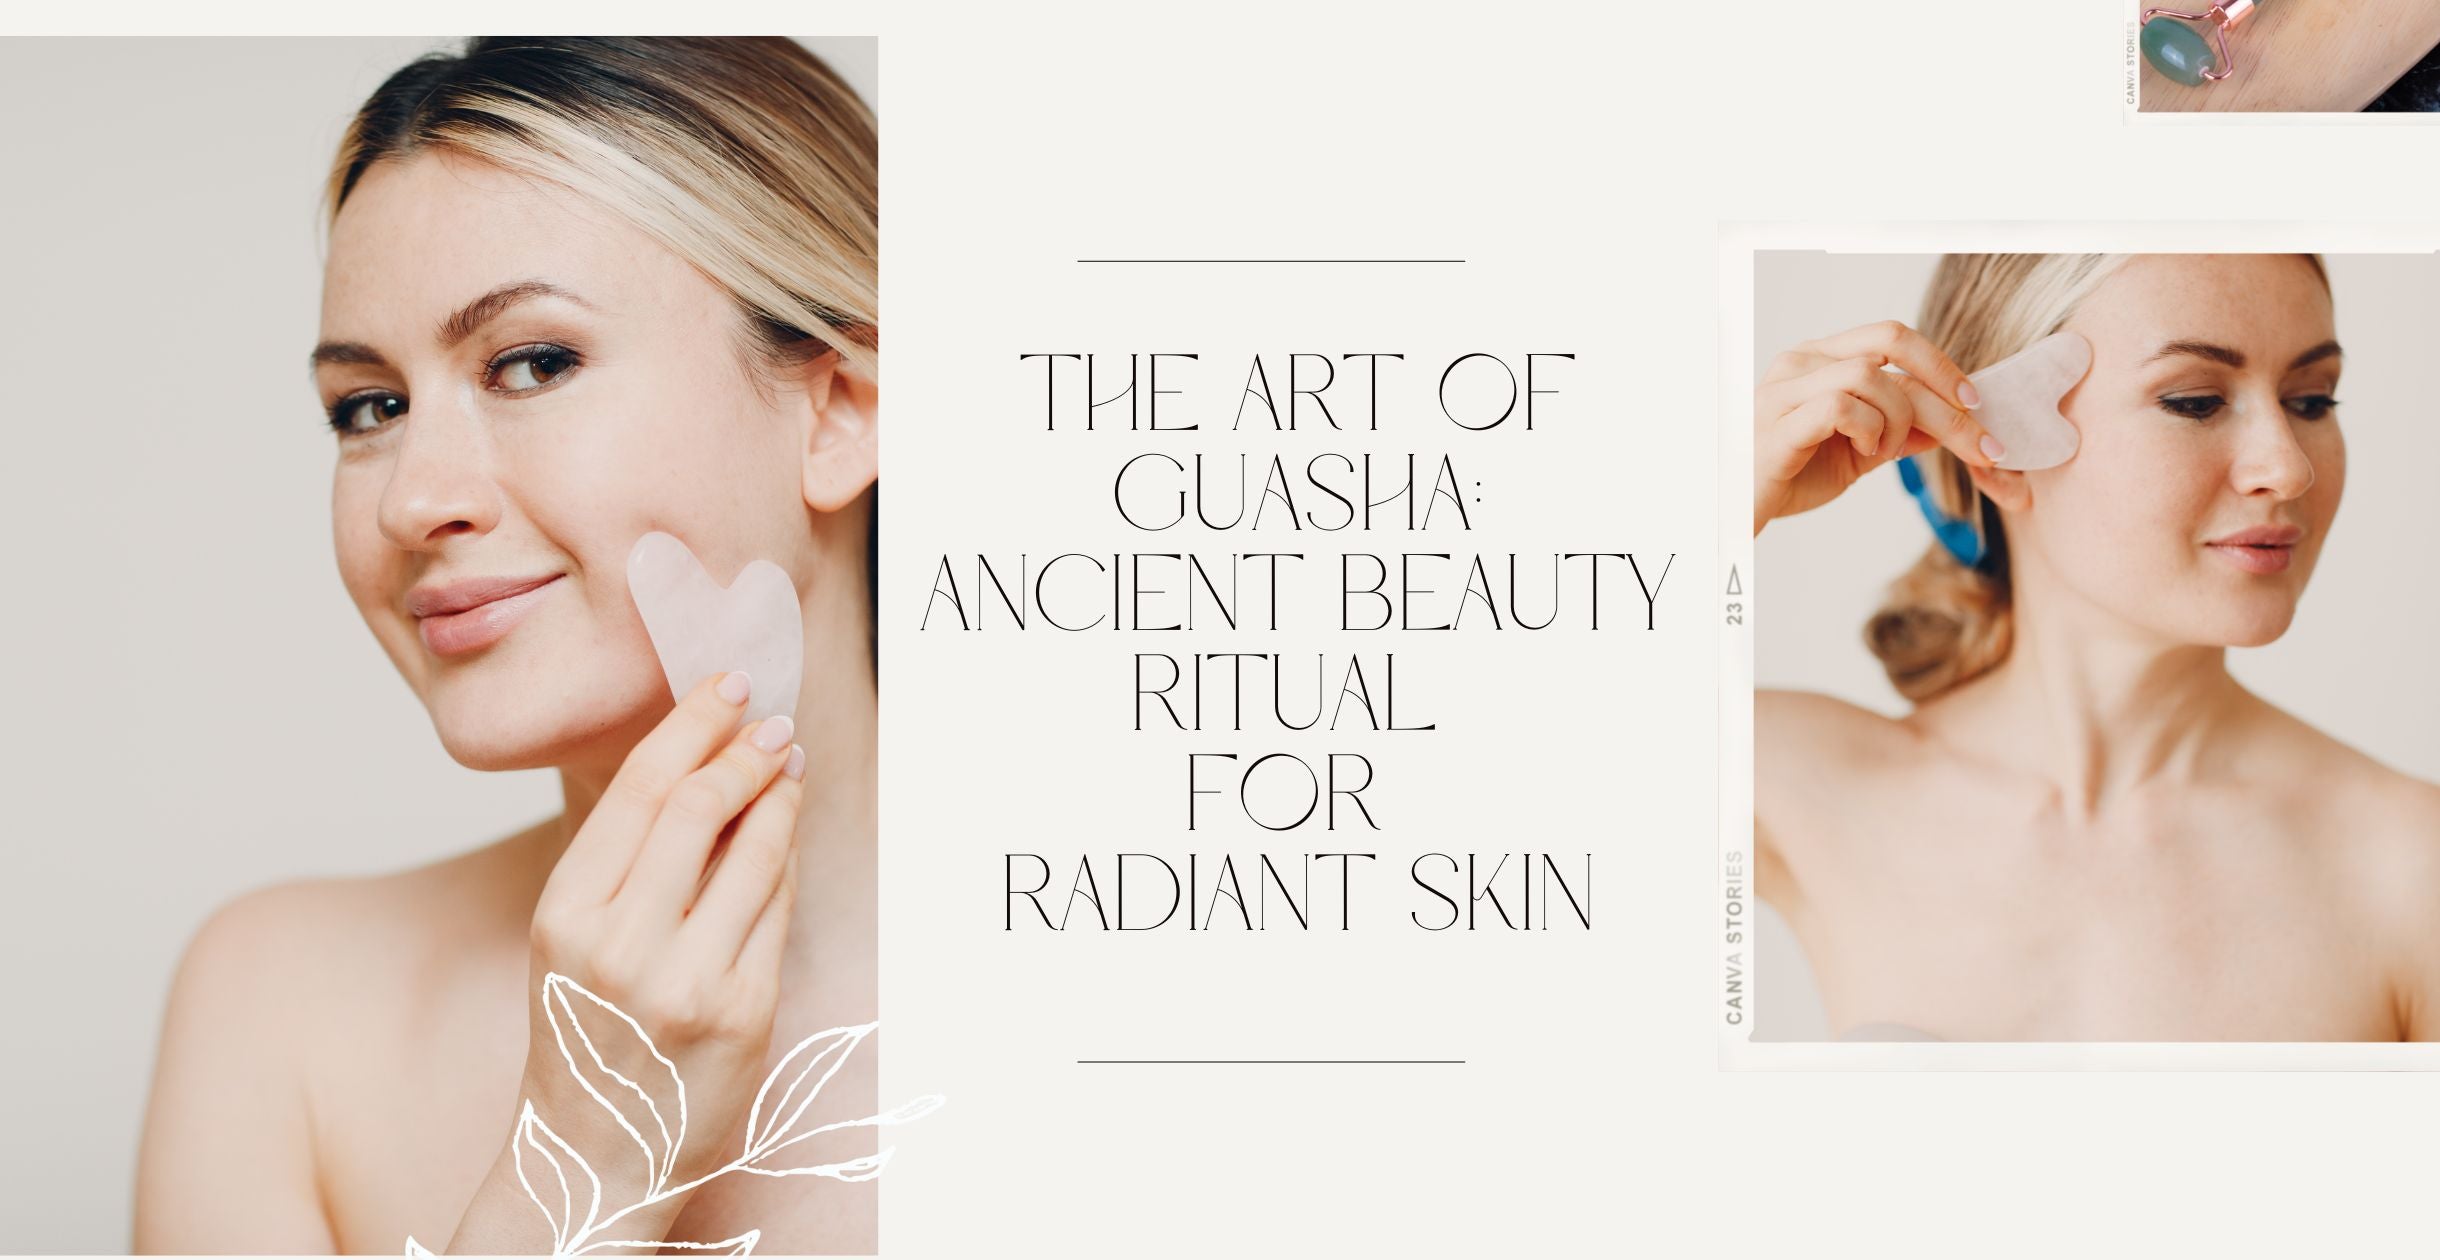 The Art of Guasha: Ancient Beauty Ritual for Radiant Skin